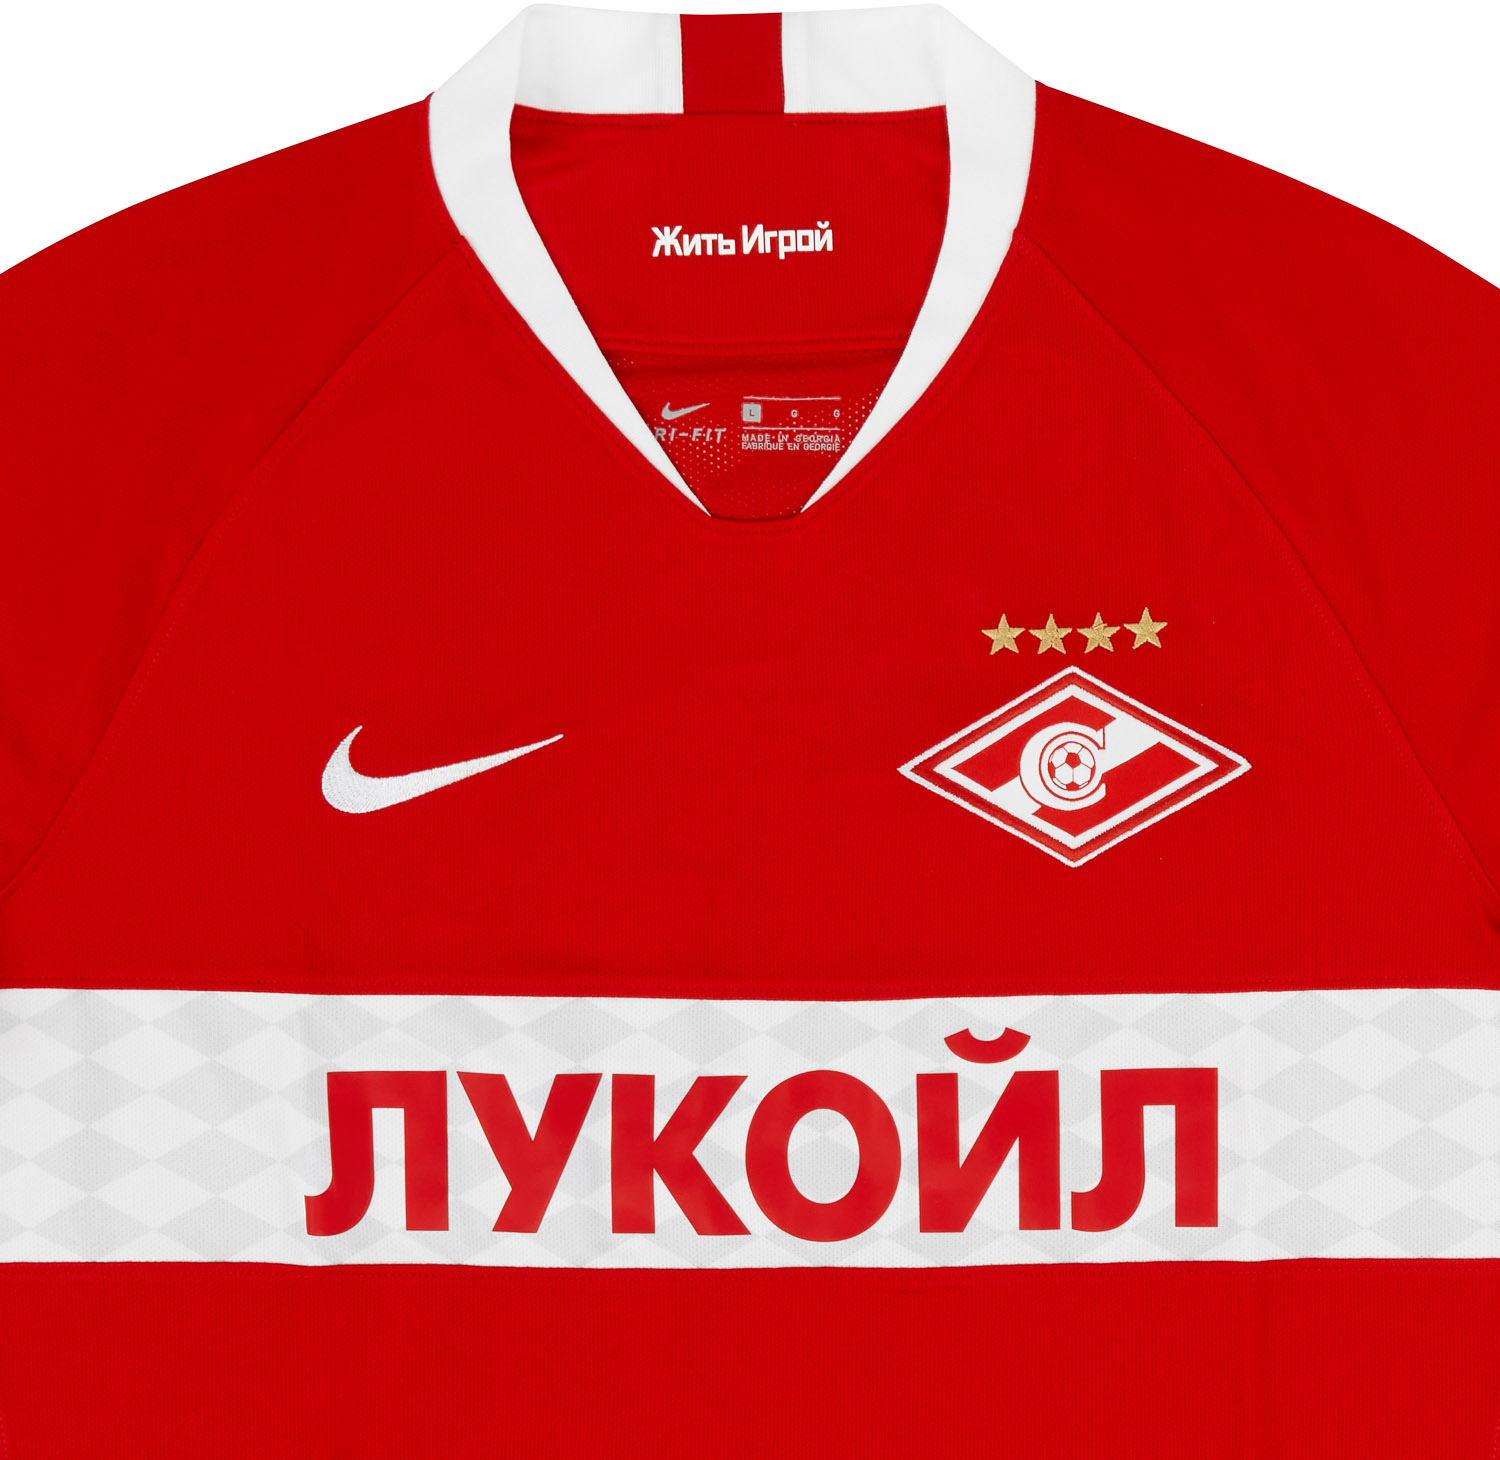 Spartak Moscow Home camisa de futebol 2019 - 2020. Sponsored by Lukoil